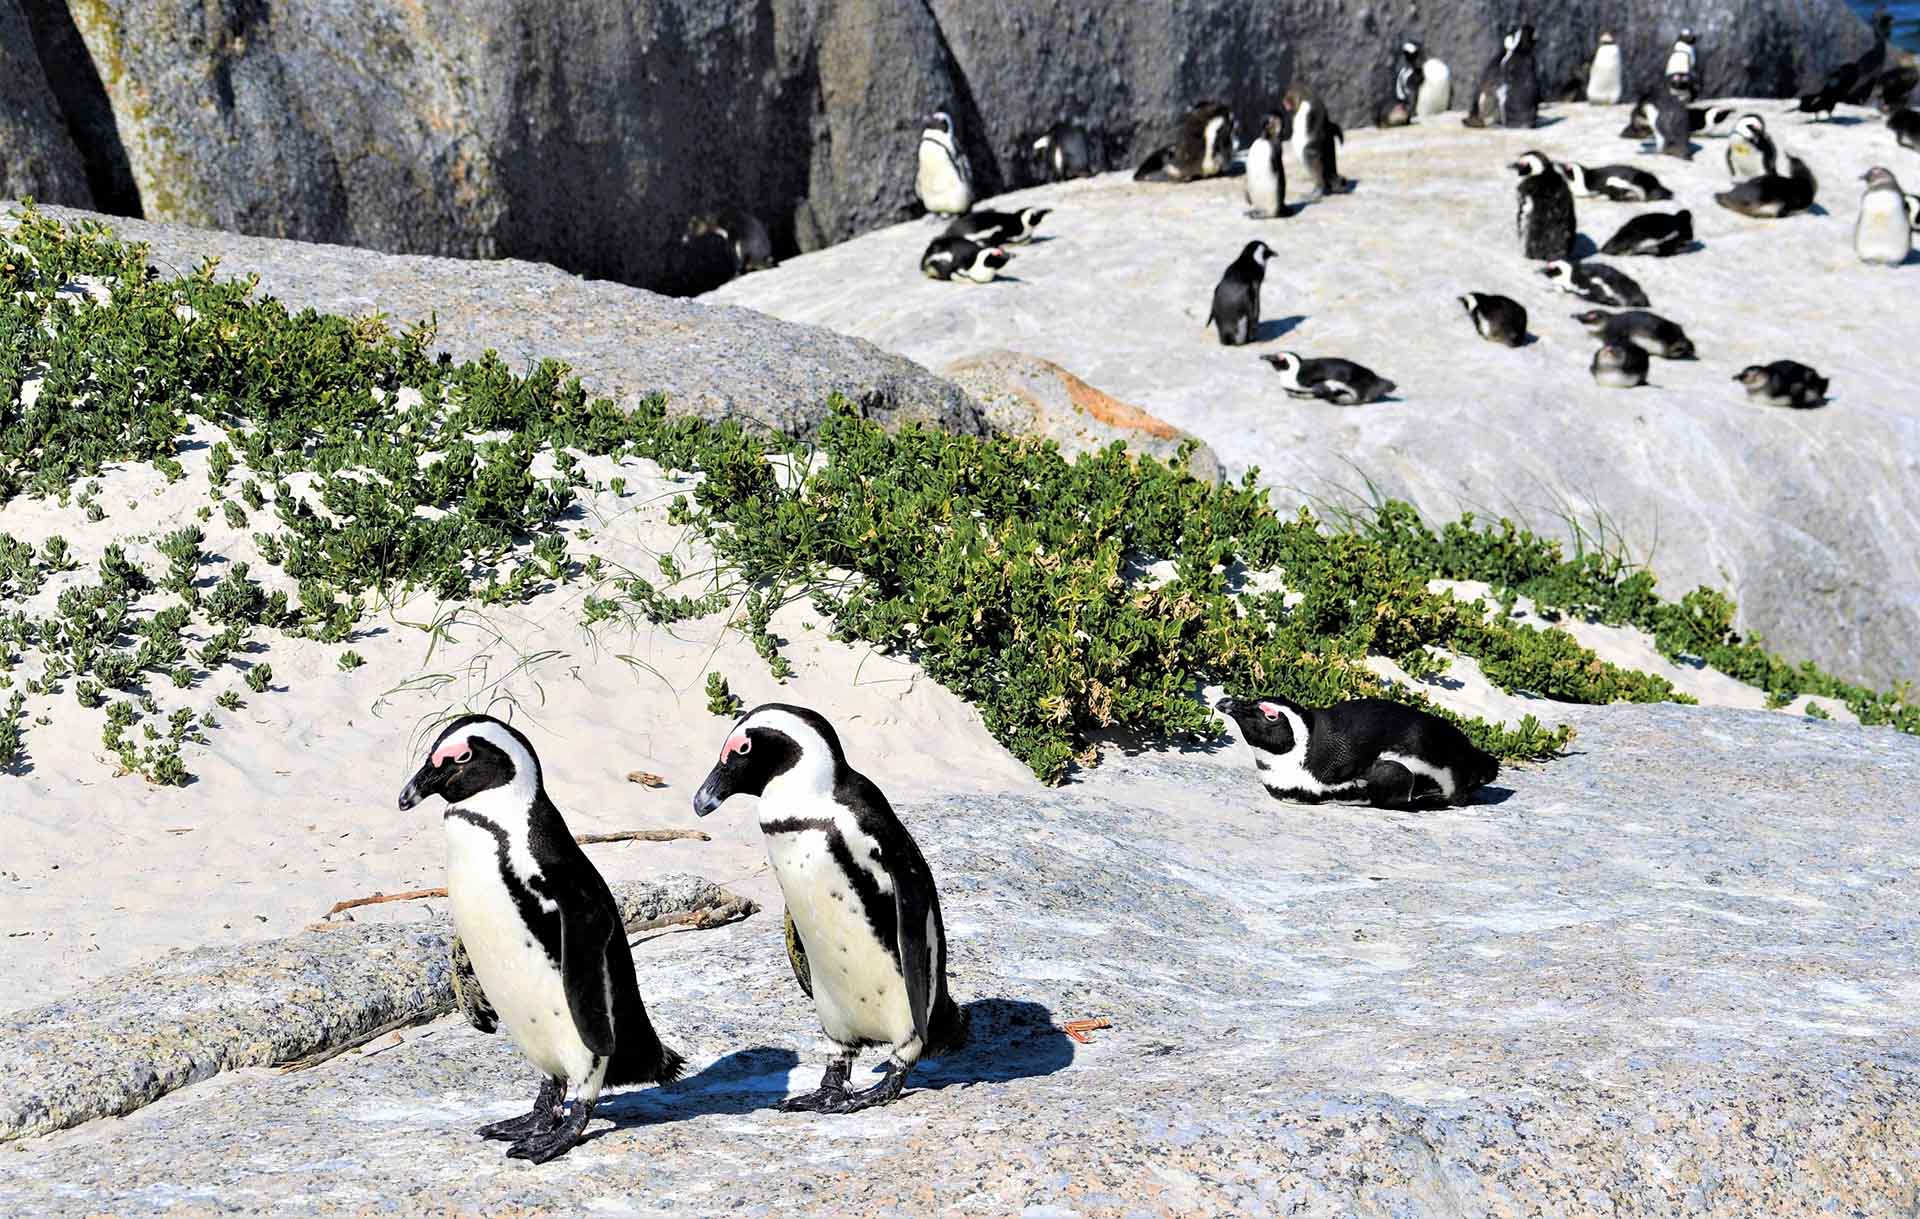 Penguin colonies of Boulders Beach